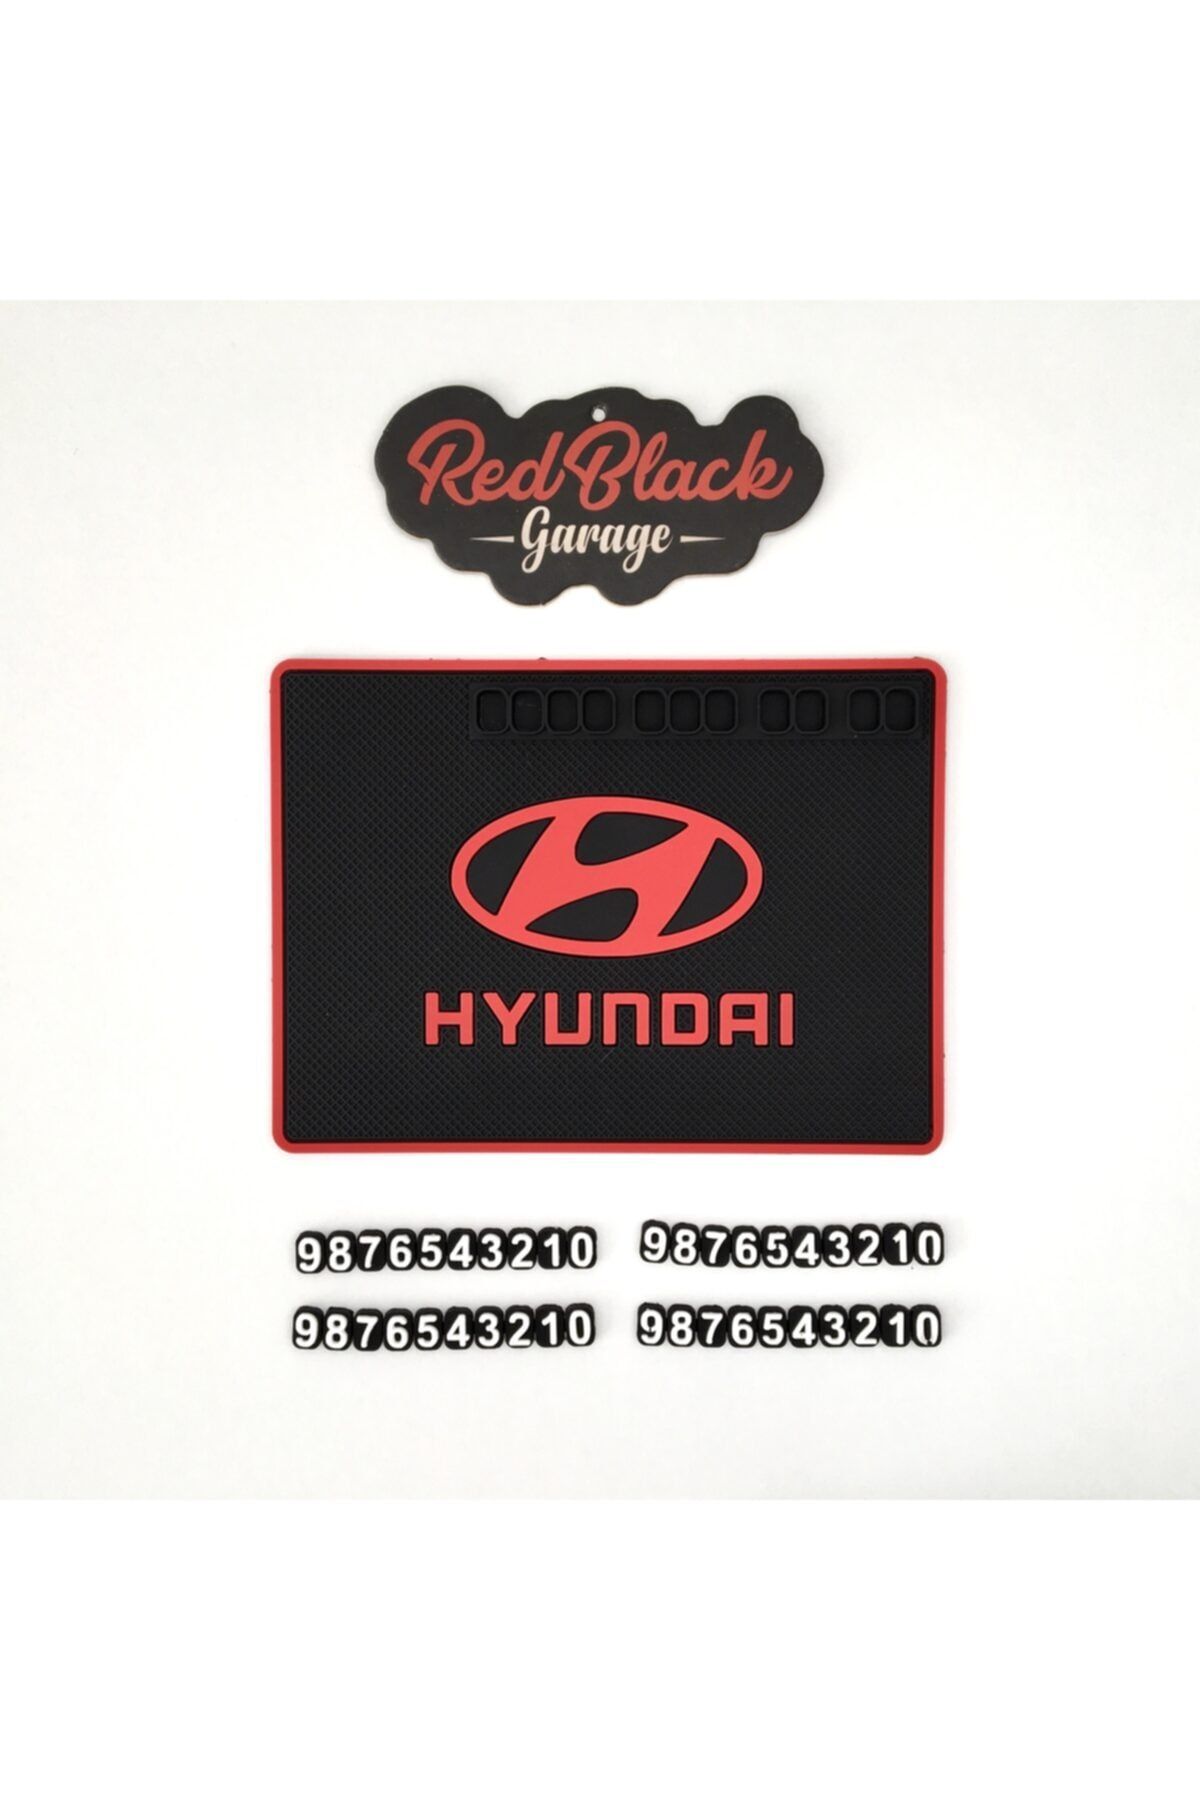 RedBlack Garage Redblack Hyundaı Araç Logolu Numaratör 1. Sınıf